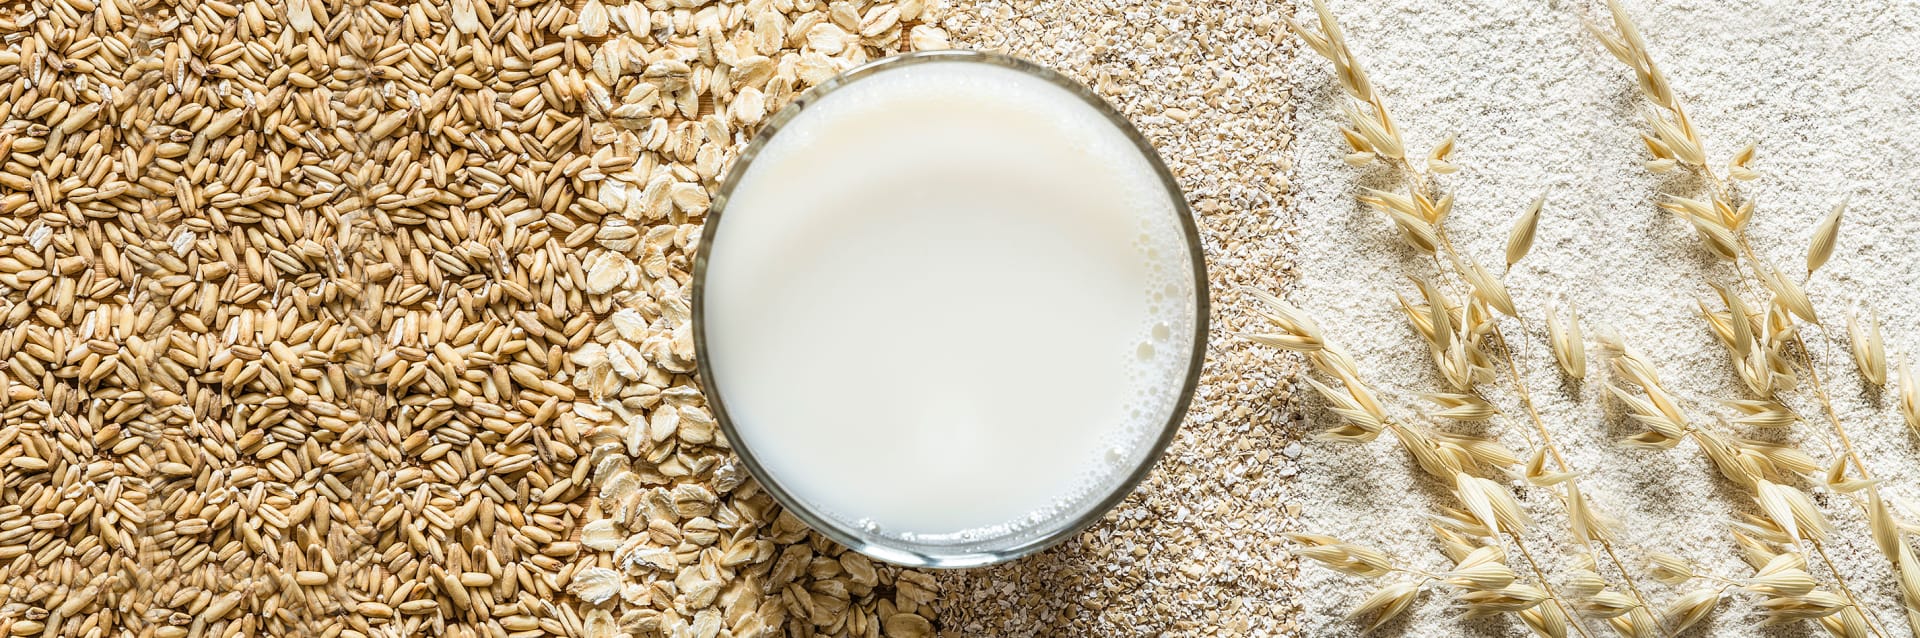 enzimi produzione latte d’avena soia bevande vegetali biologiche